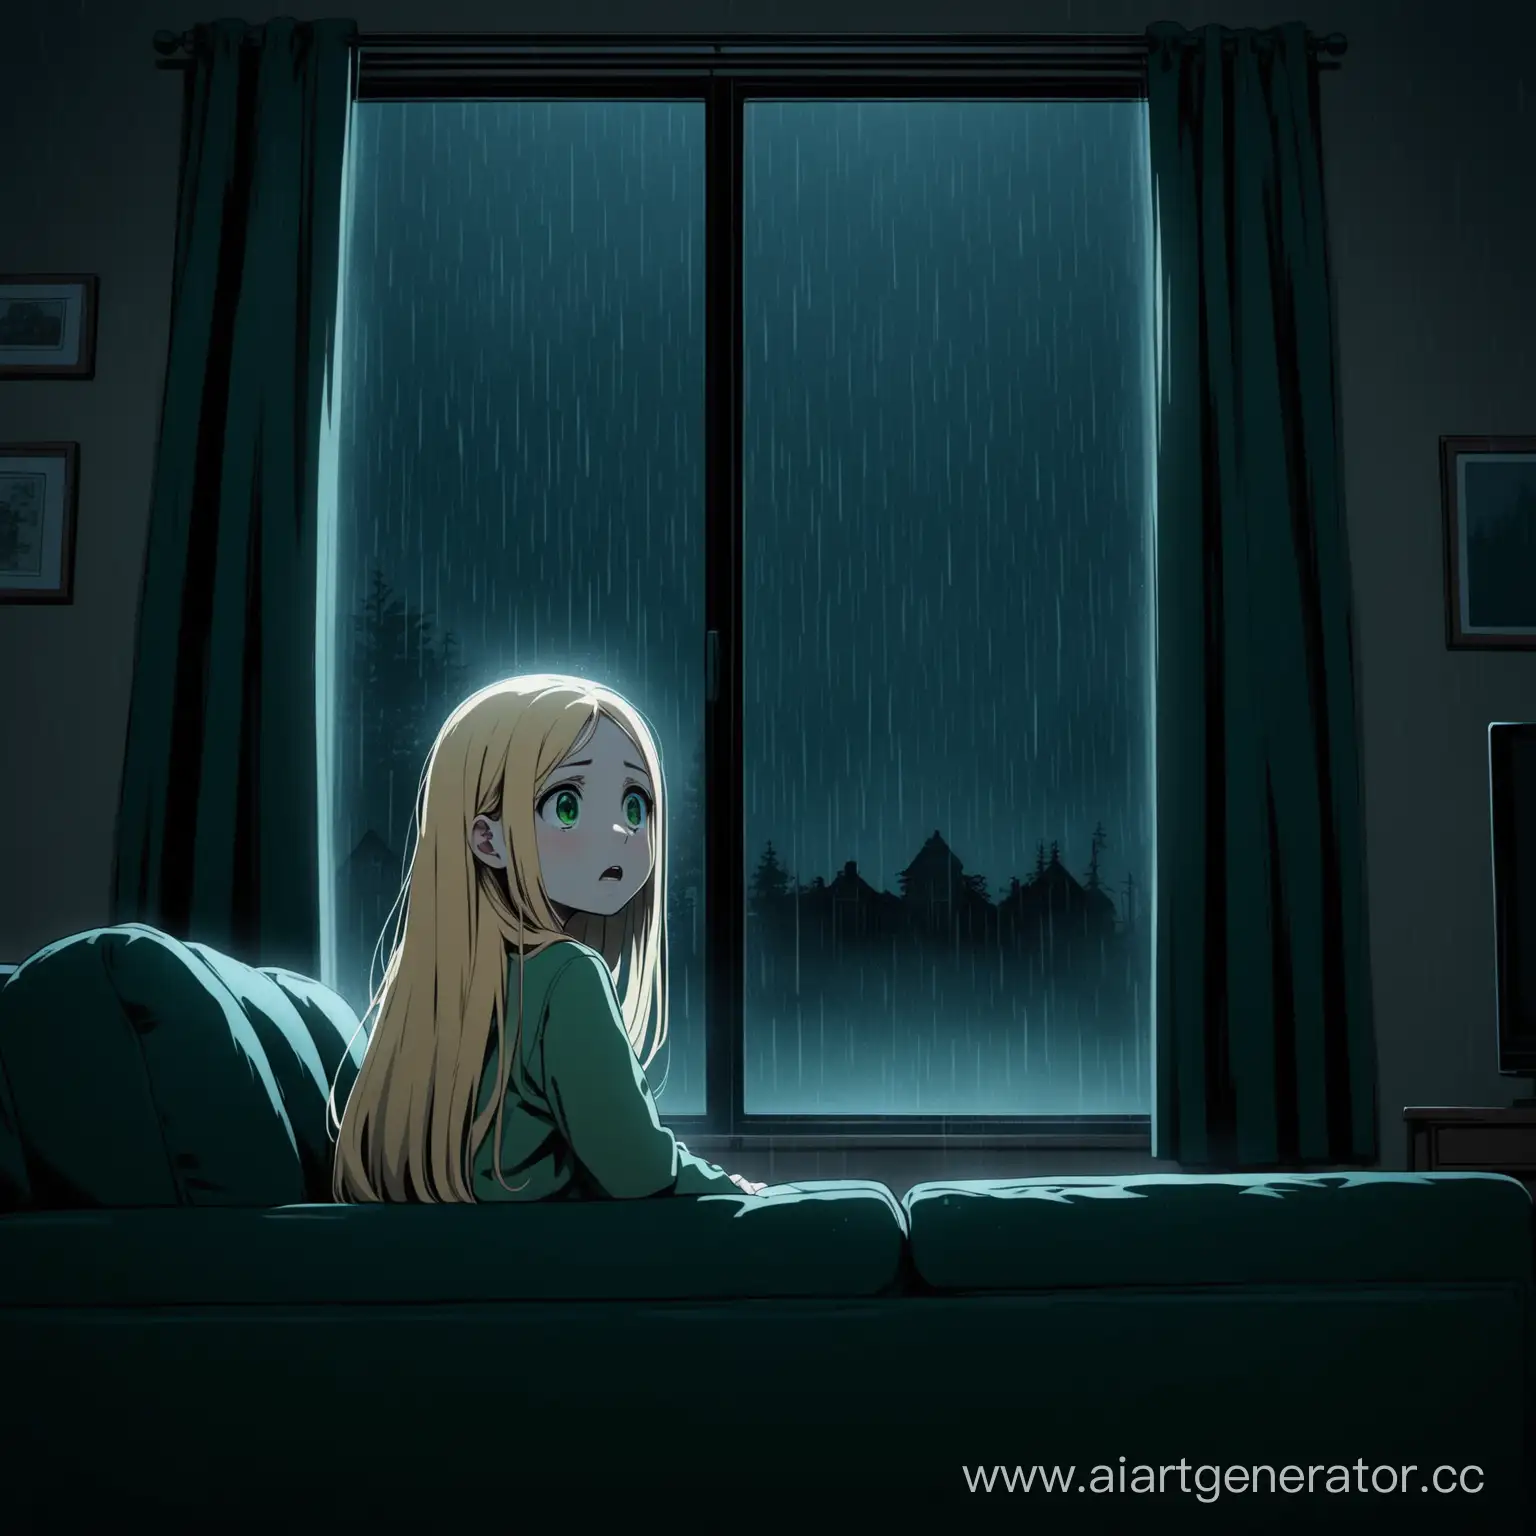 Scared-Blonde-Girl-Watching-Horror-Movie-in-Dark-Room-on-Rainy-Day